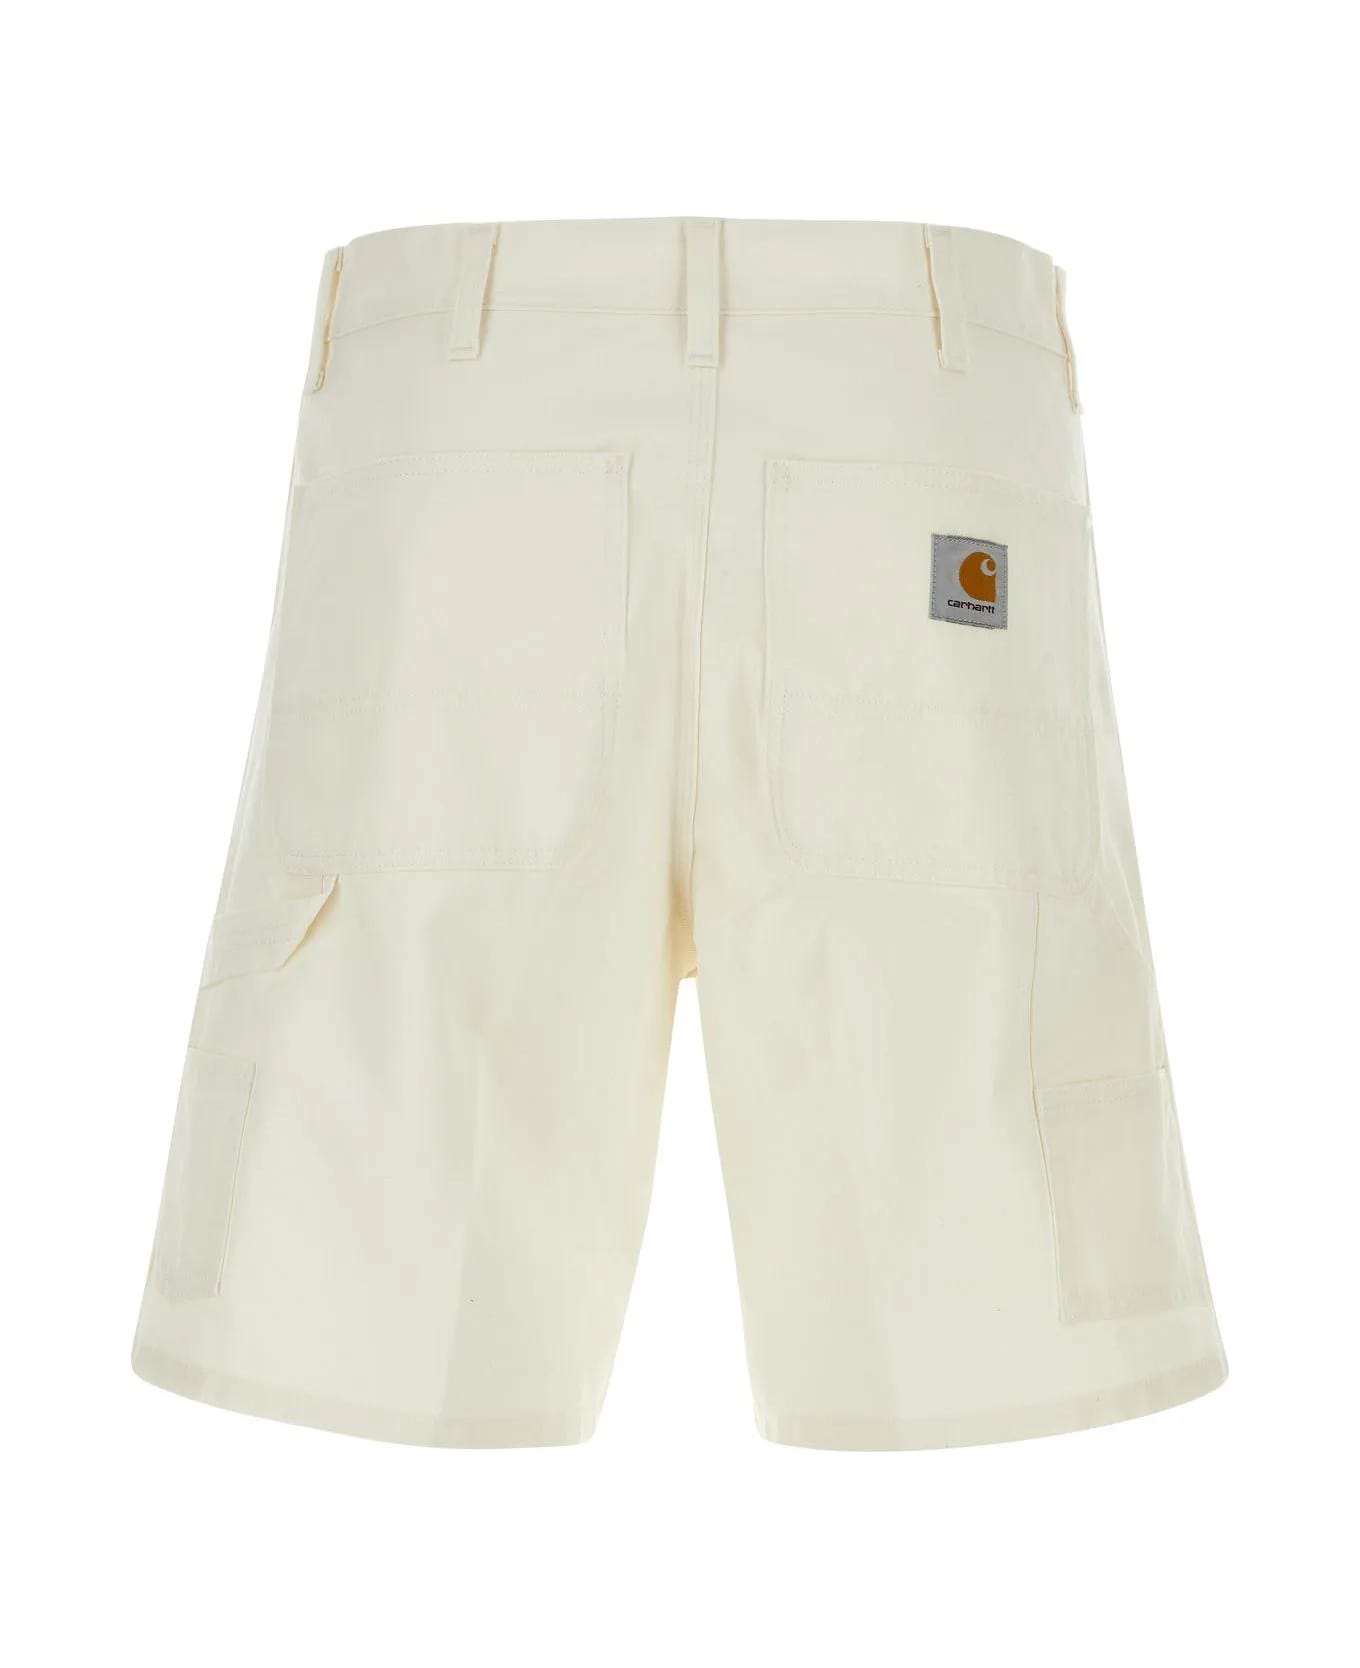 Carhartt White Cotton Double Knee Short - WHITE